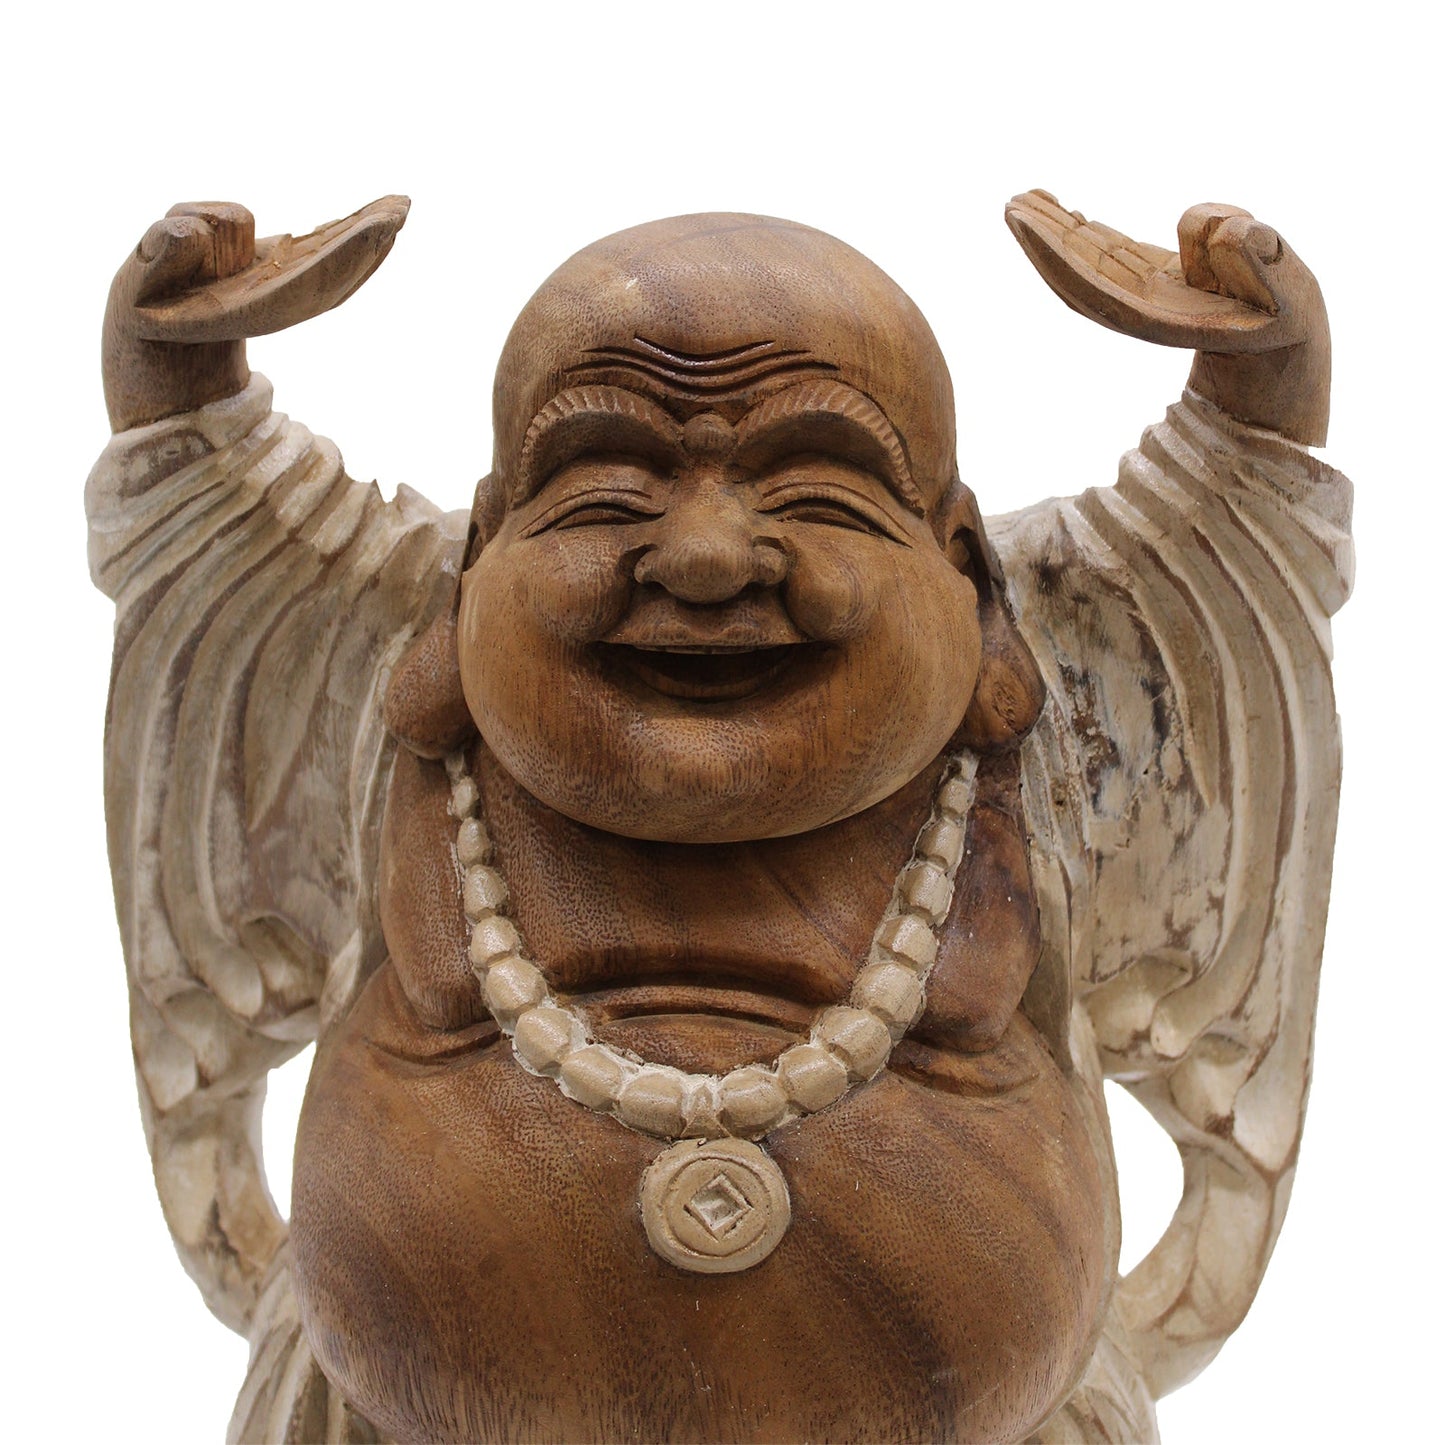 Happy Buddha Hands Up - Whitewash 40cm - Positive Faith Hope Love